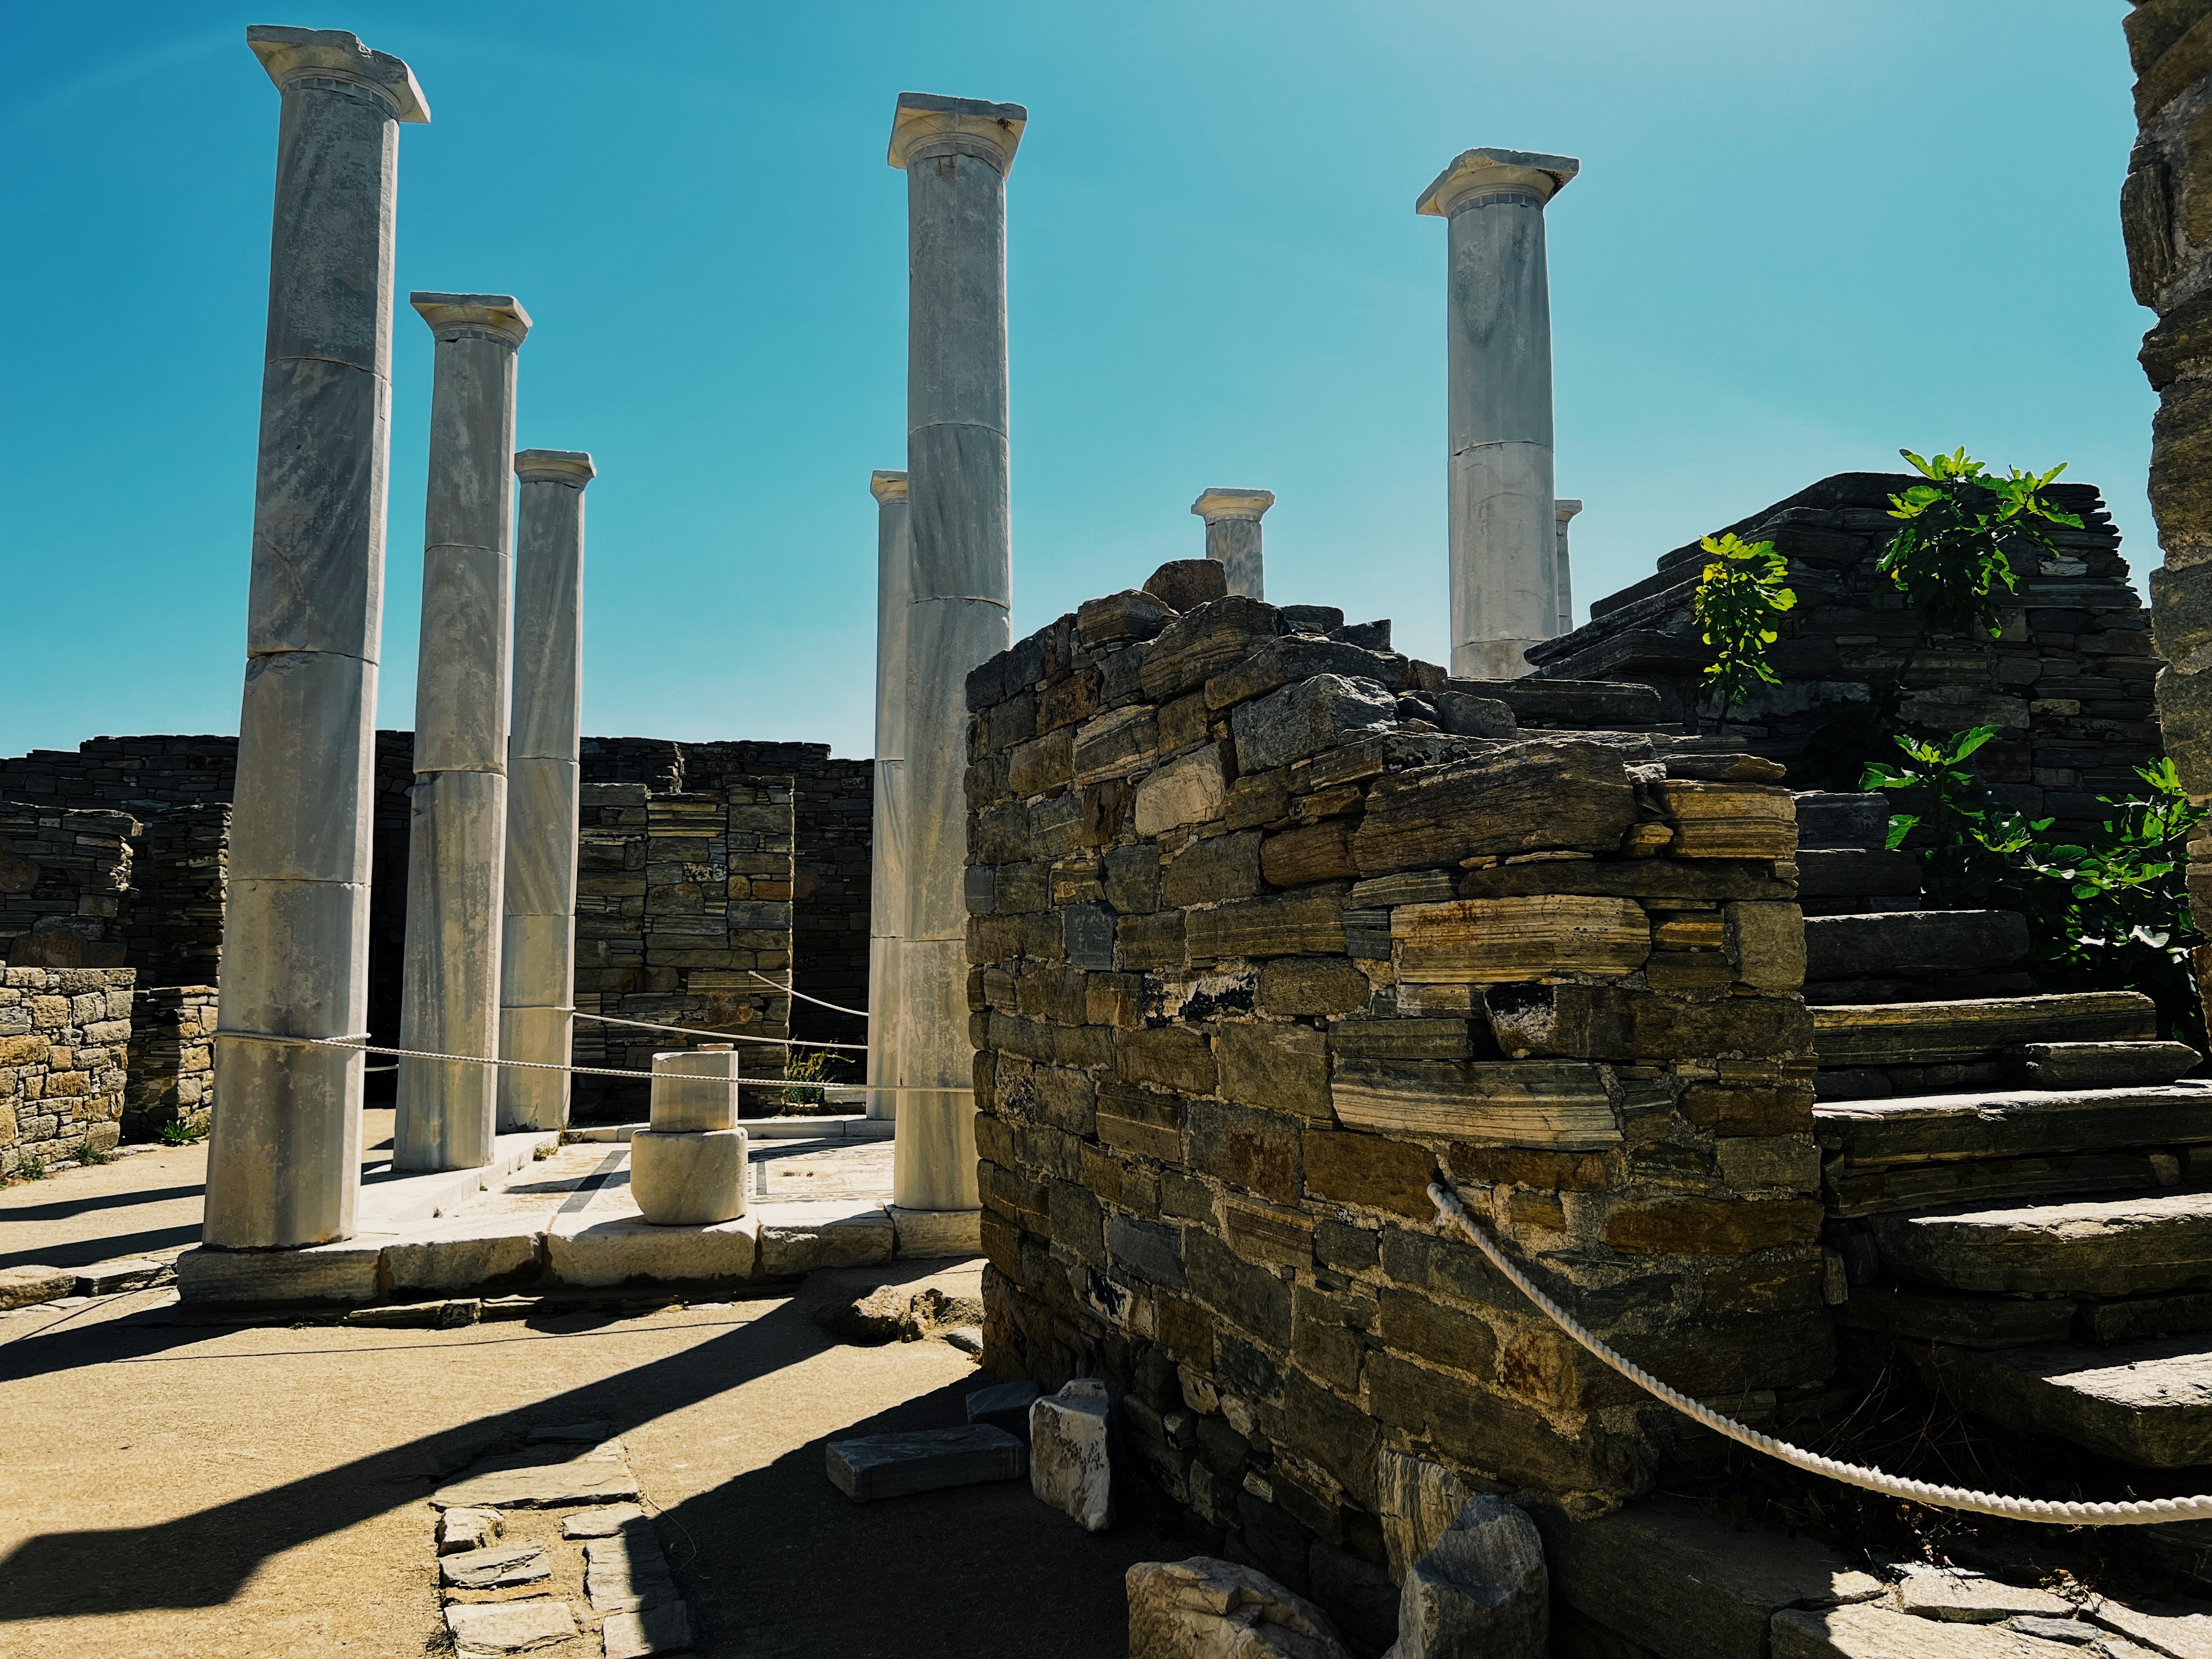 Pillars in an ancient house